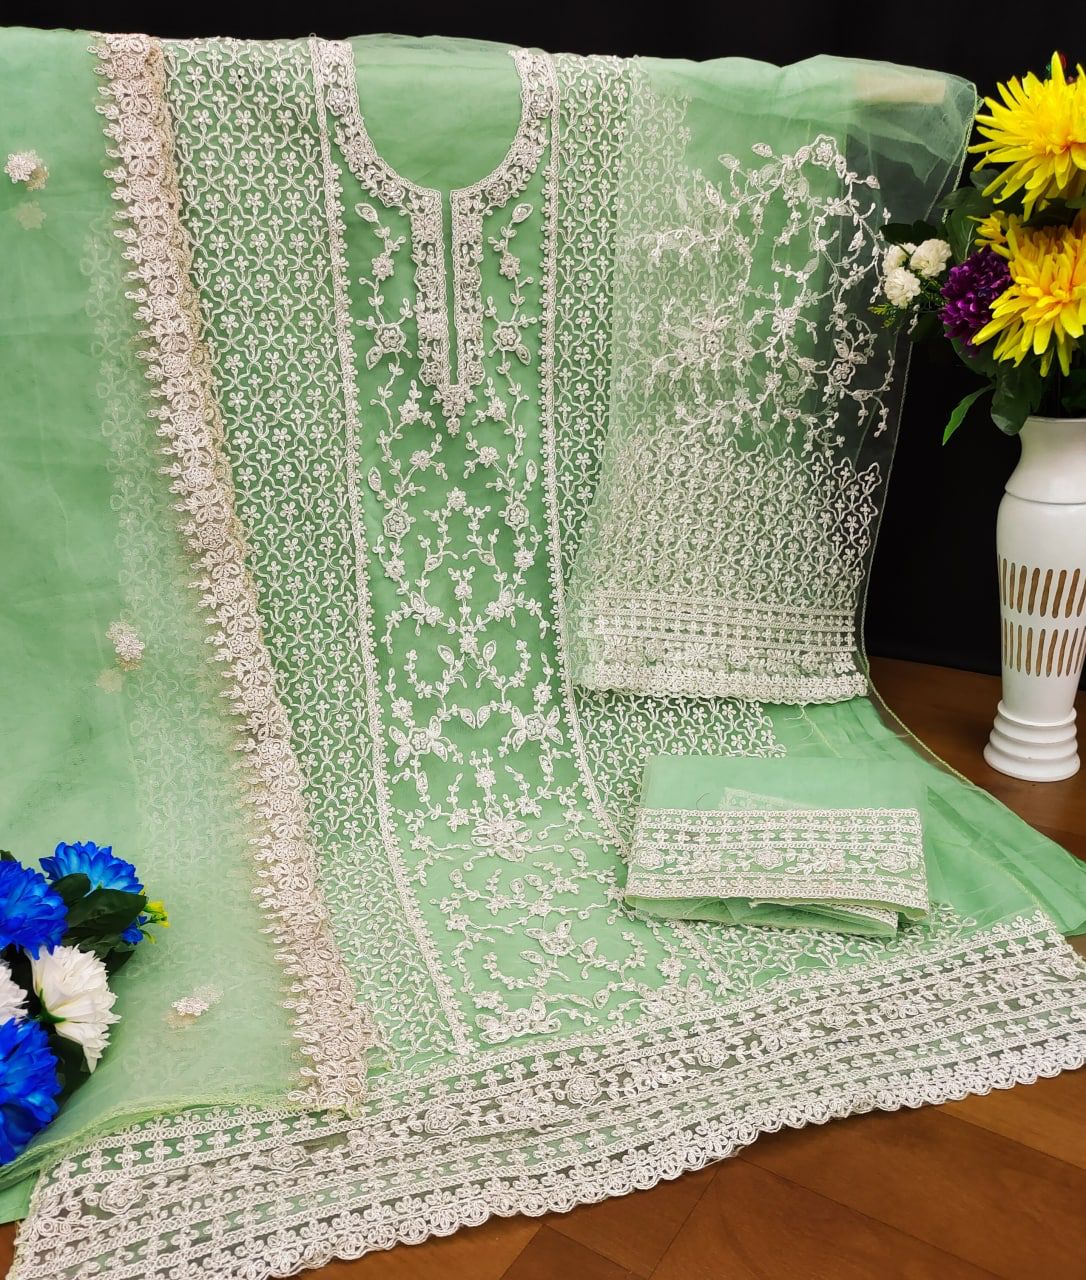 Kaleesha Fashion Swagat Swati 3304 Colors Semi Stitched Dress Material Catalog Lowest Price